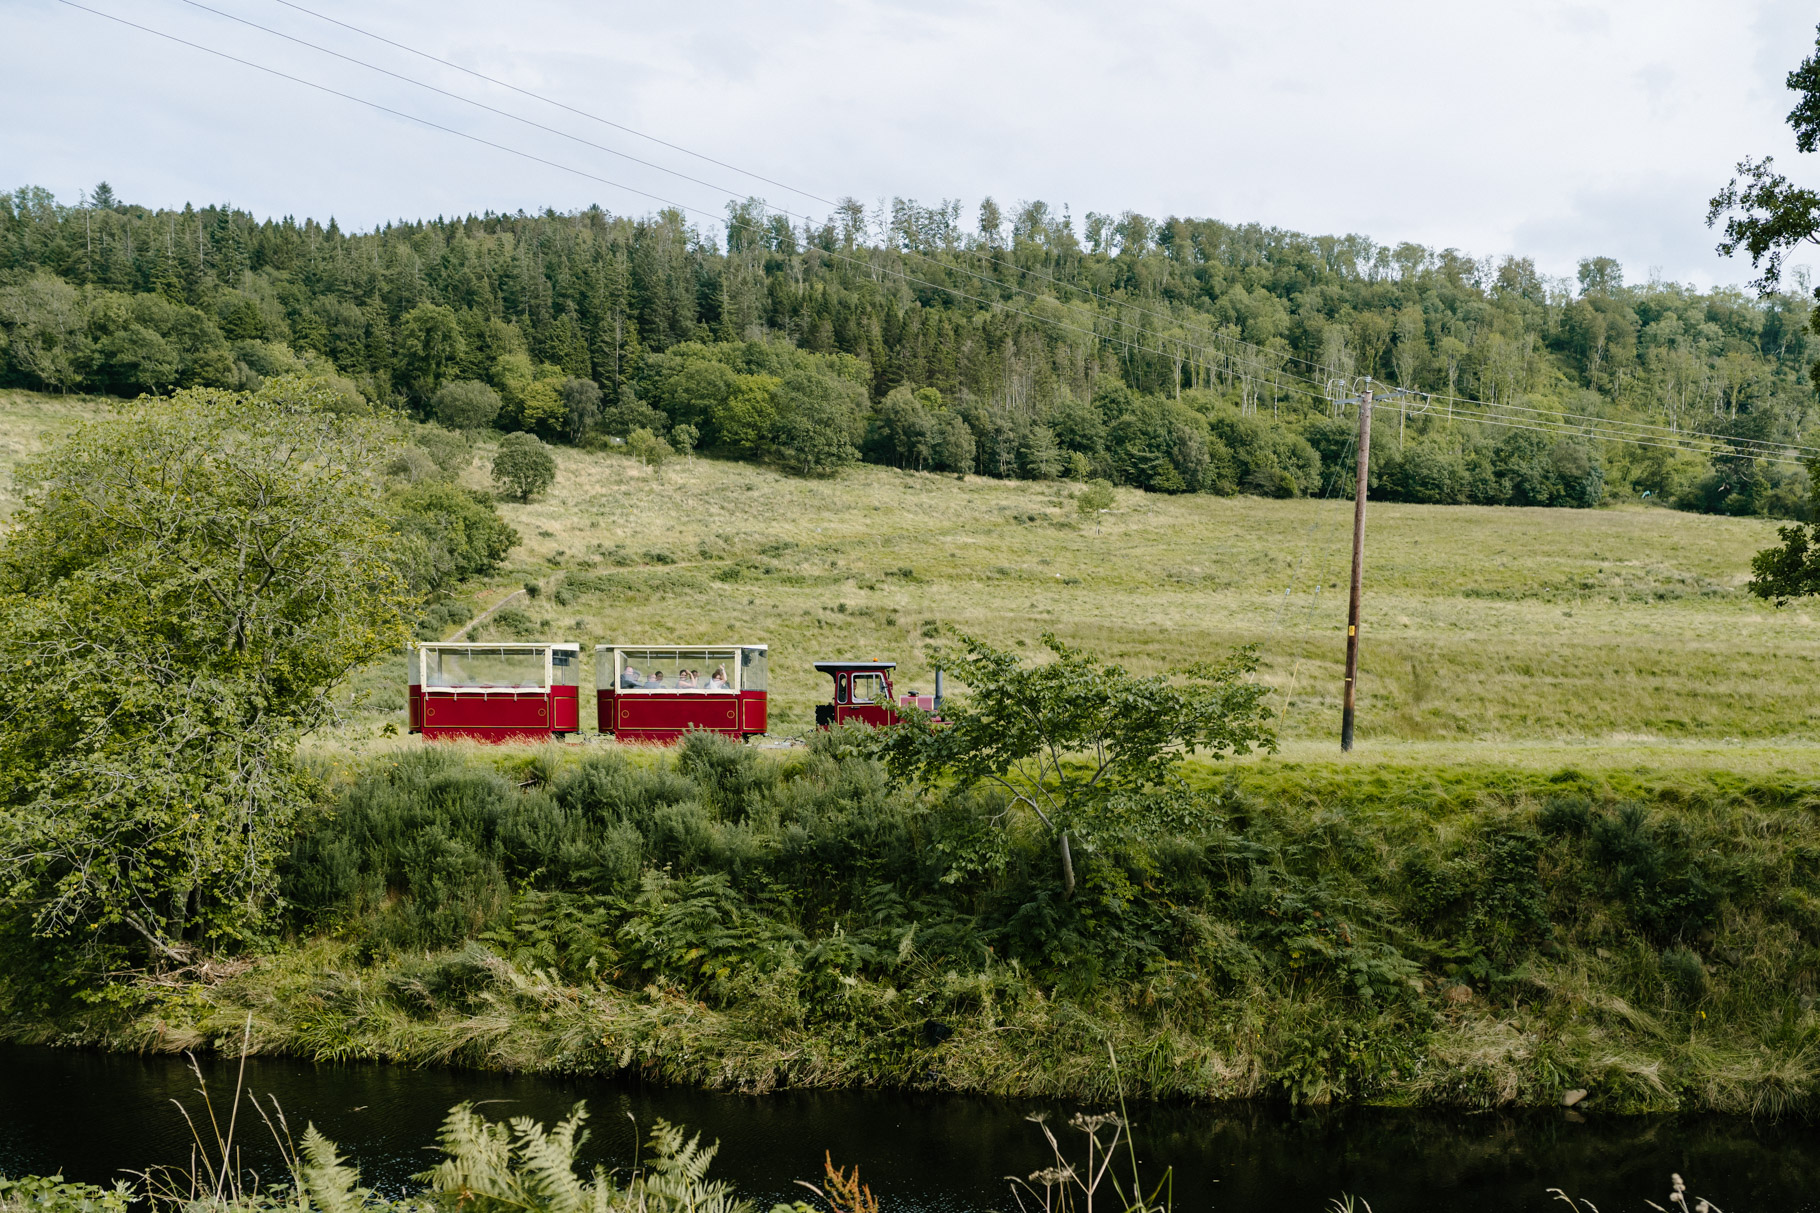 Glenarm Riverlodge train